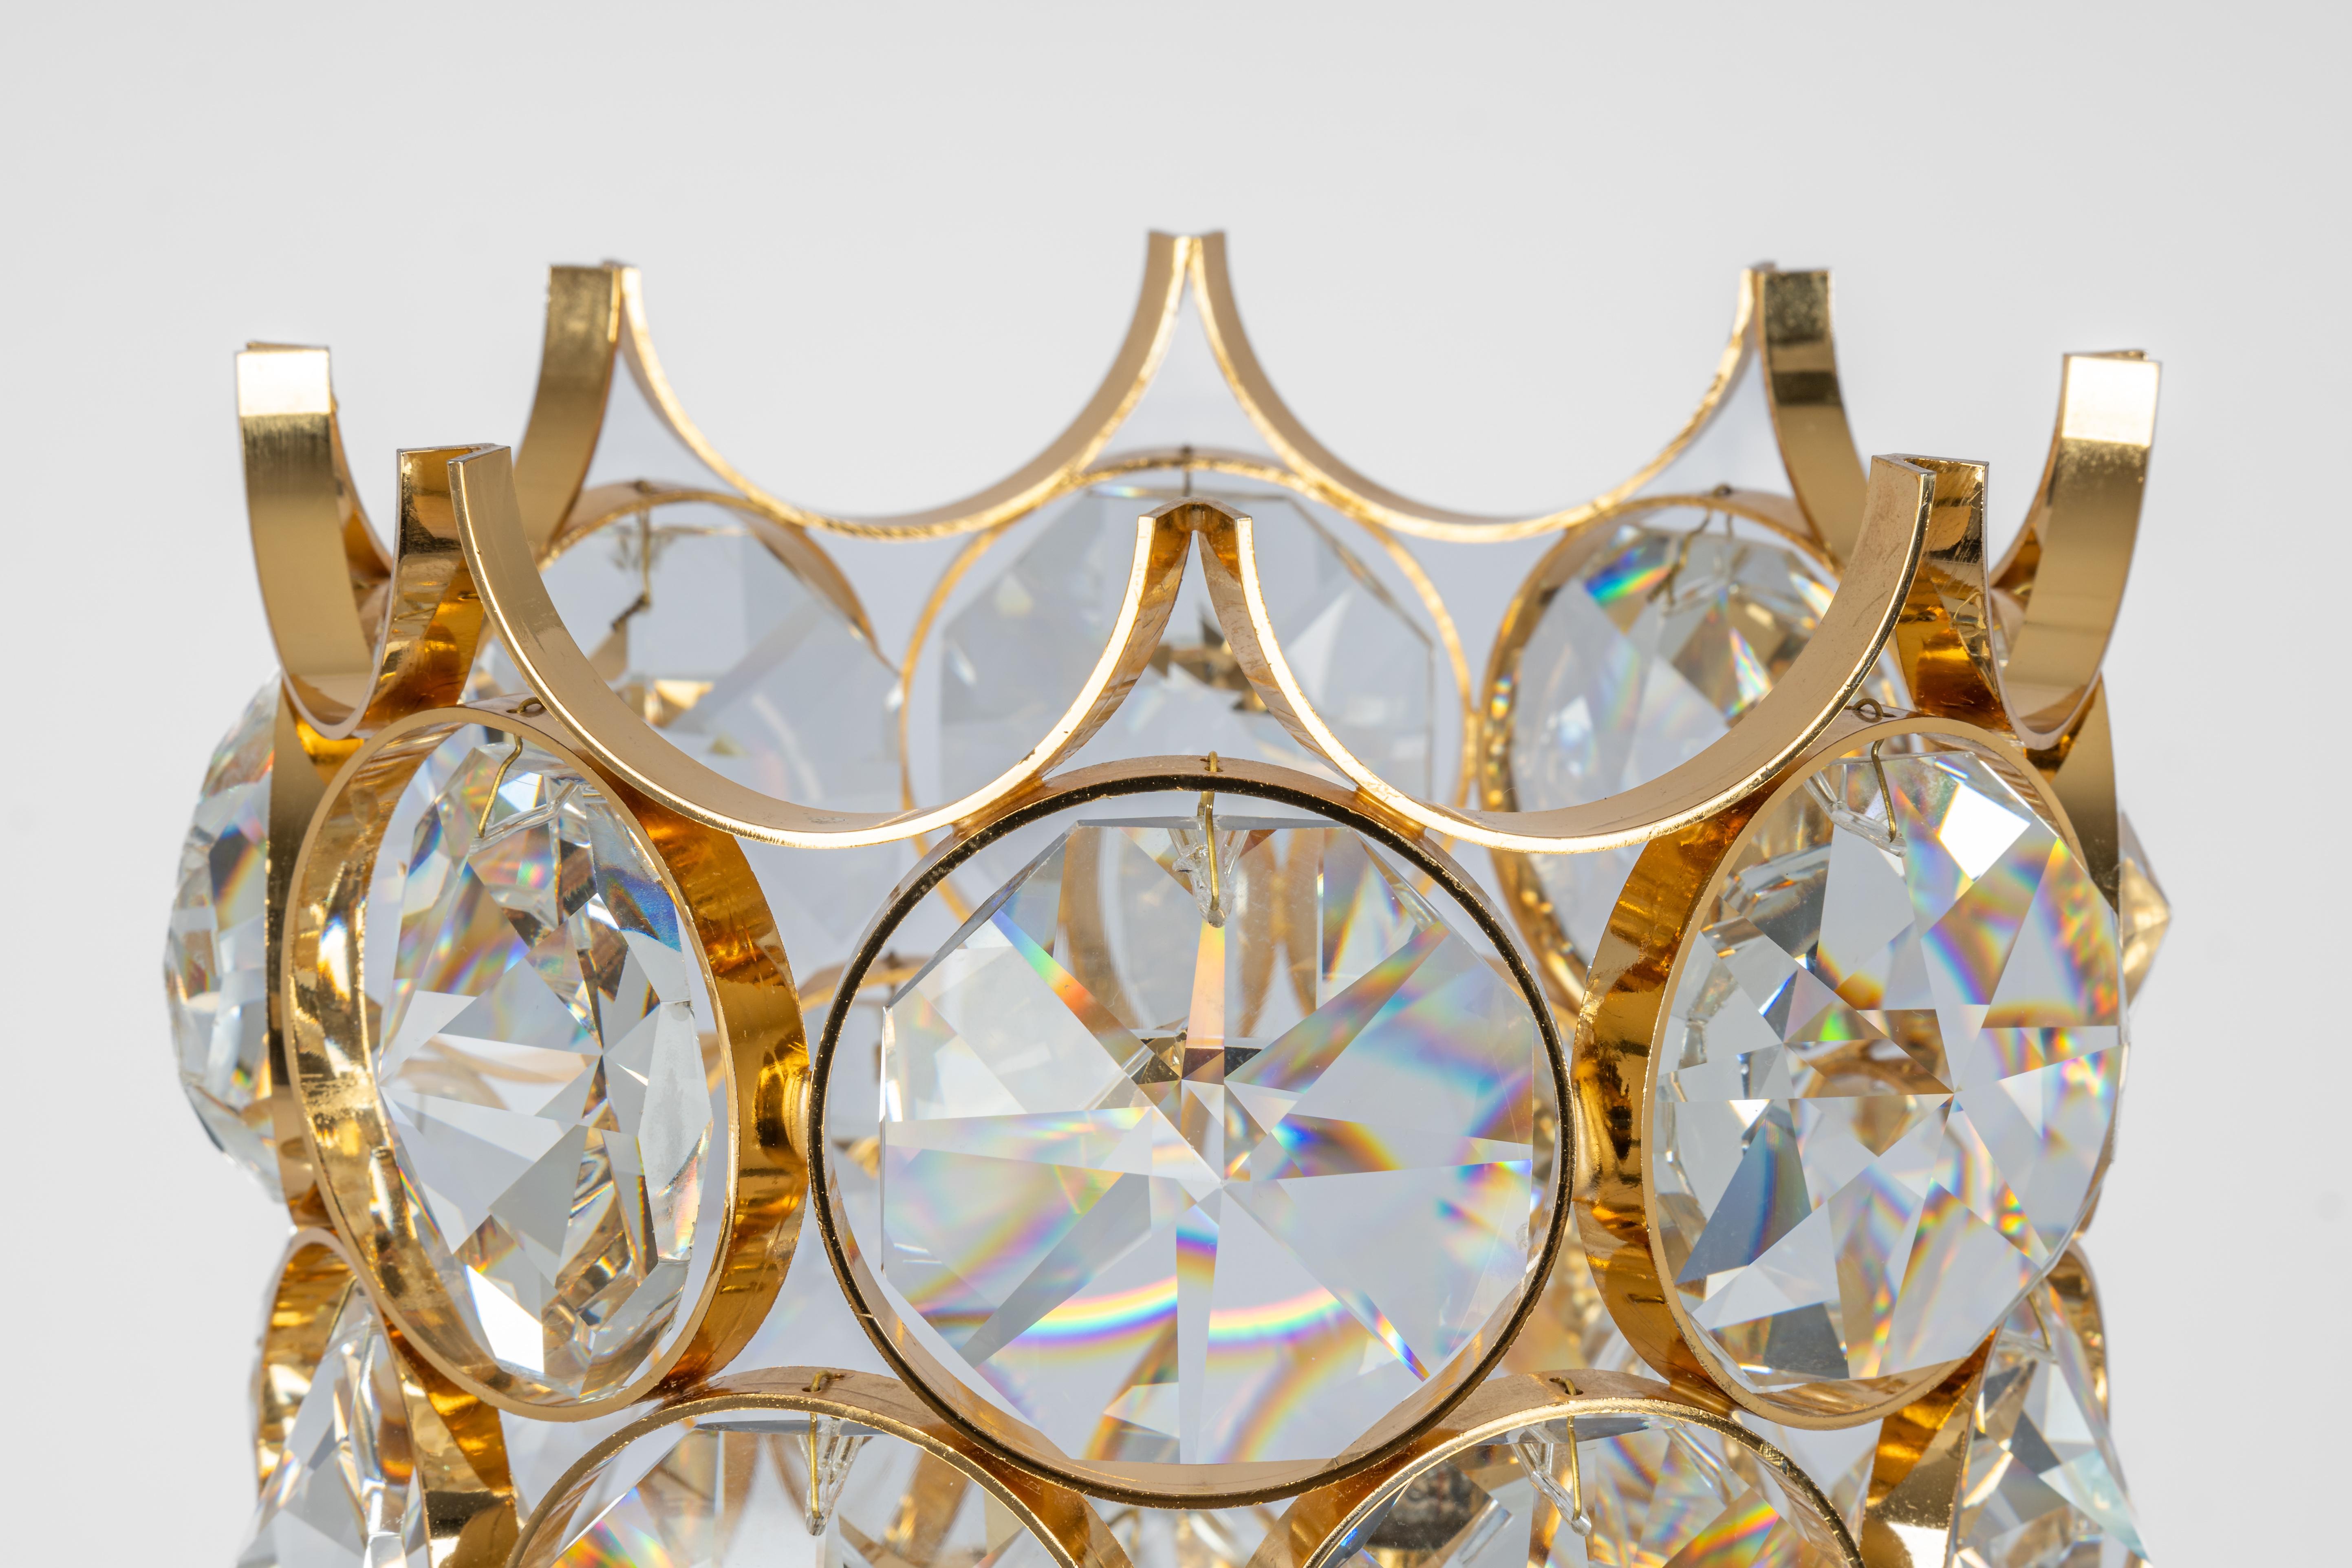 Brass Exquisite Gilt Jewel Floor Lamp Sciolari Design by Palwa, Germany, 1960s For Sale